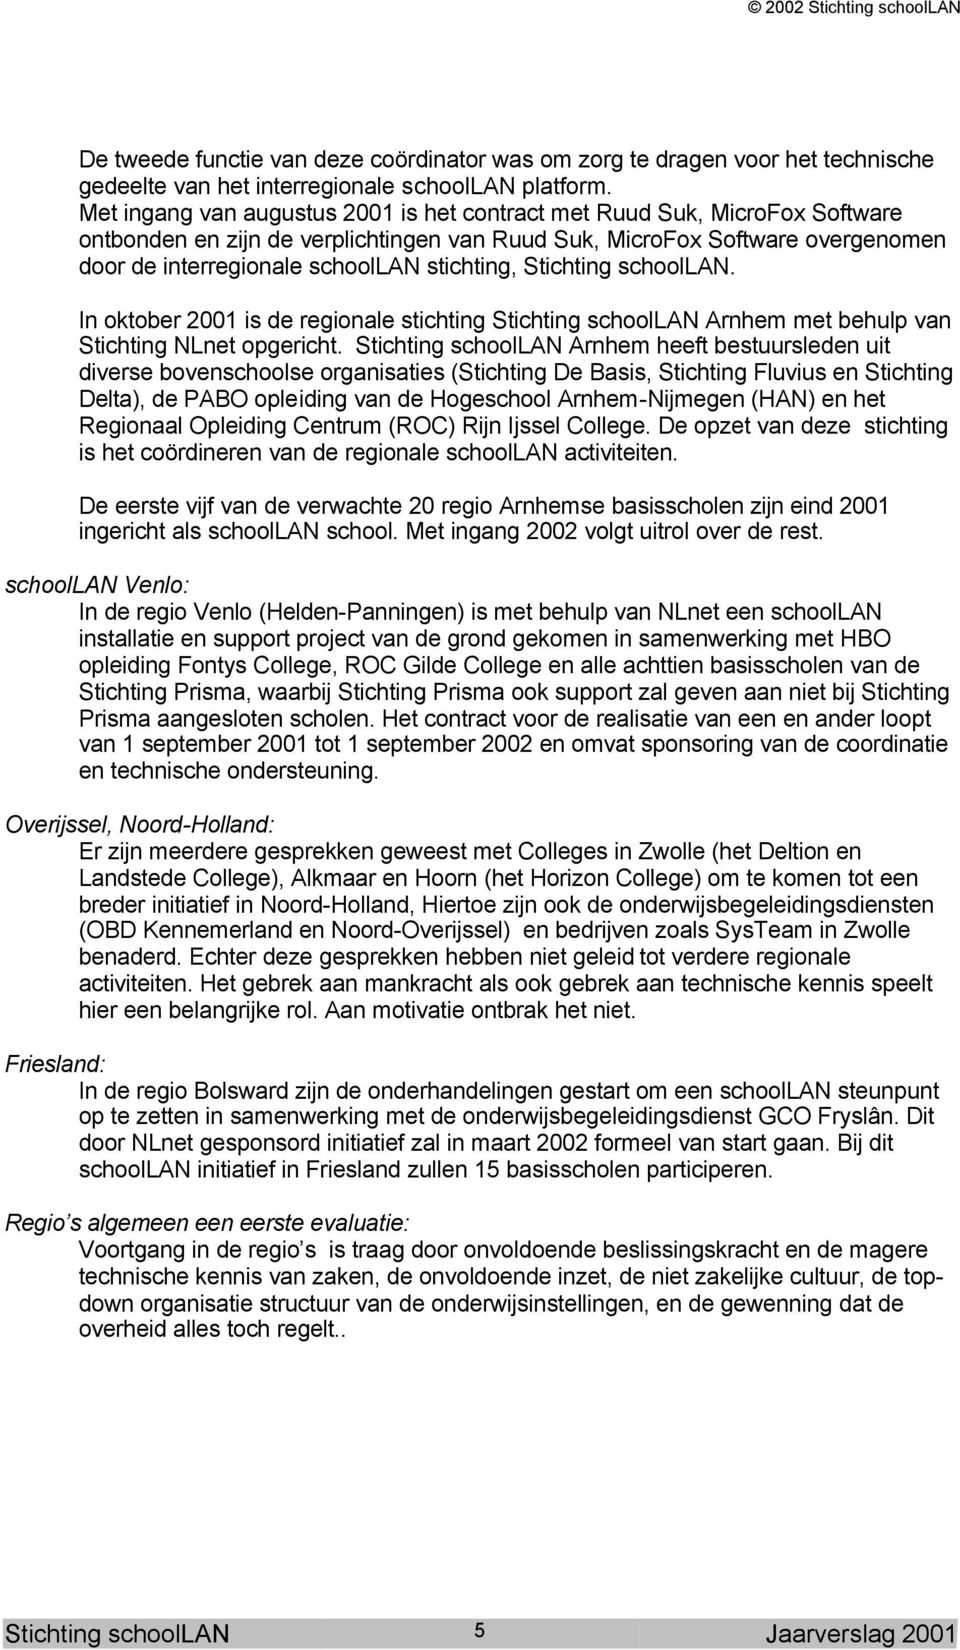 stichting, Stichting schoollan. In oktober 2001 is de regionale stichting Stichting schoollan Arnhem met behulp van Stichting NLnet opgericht.